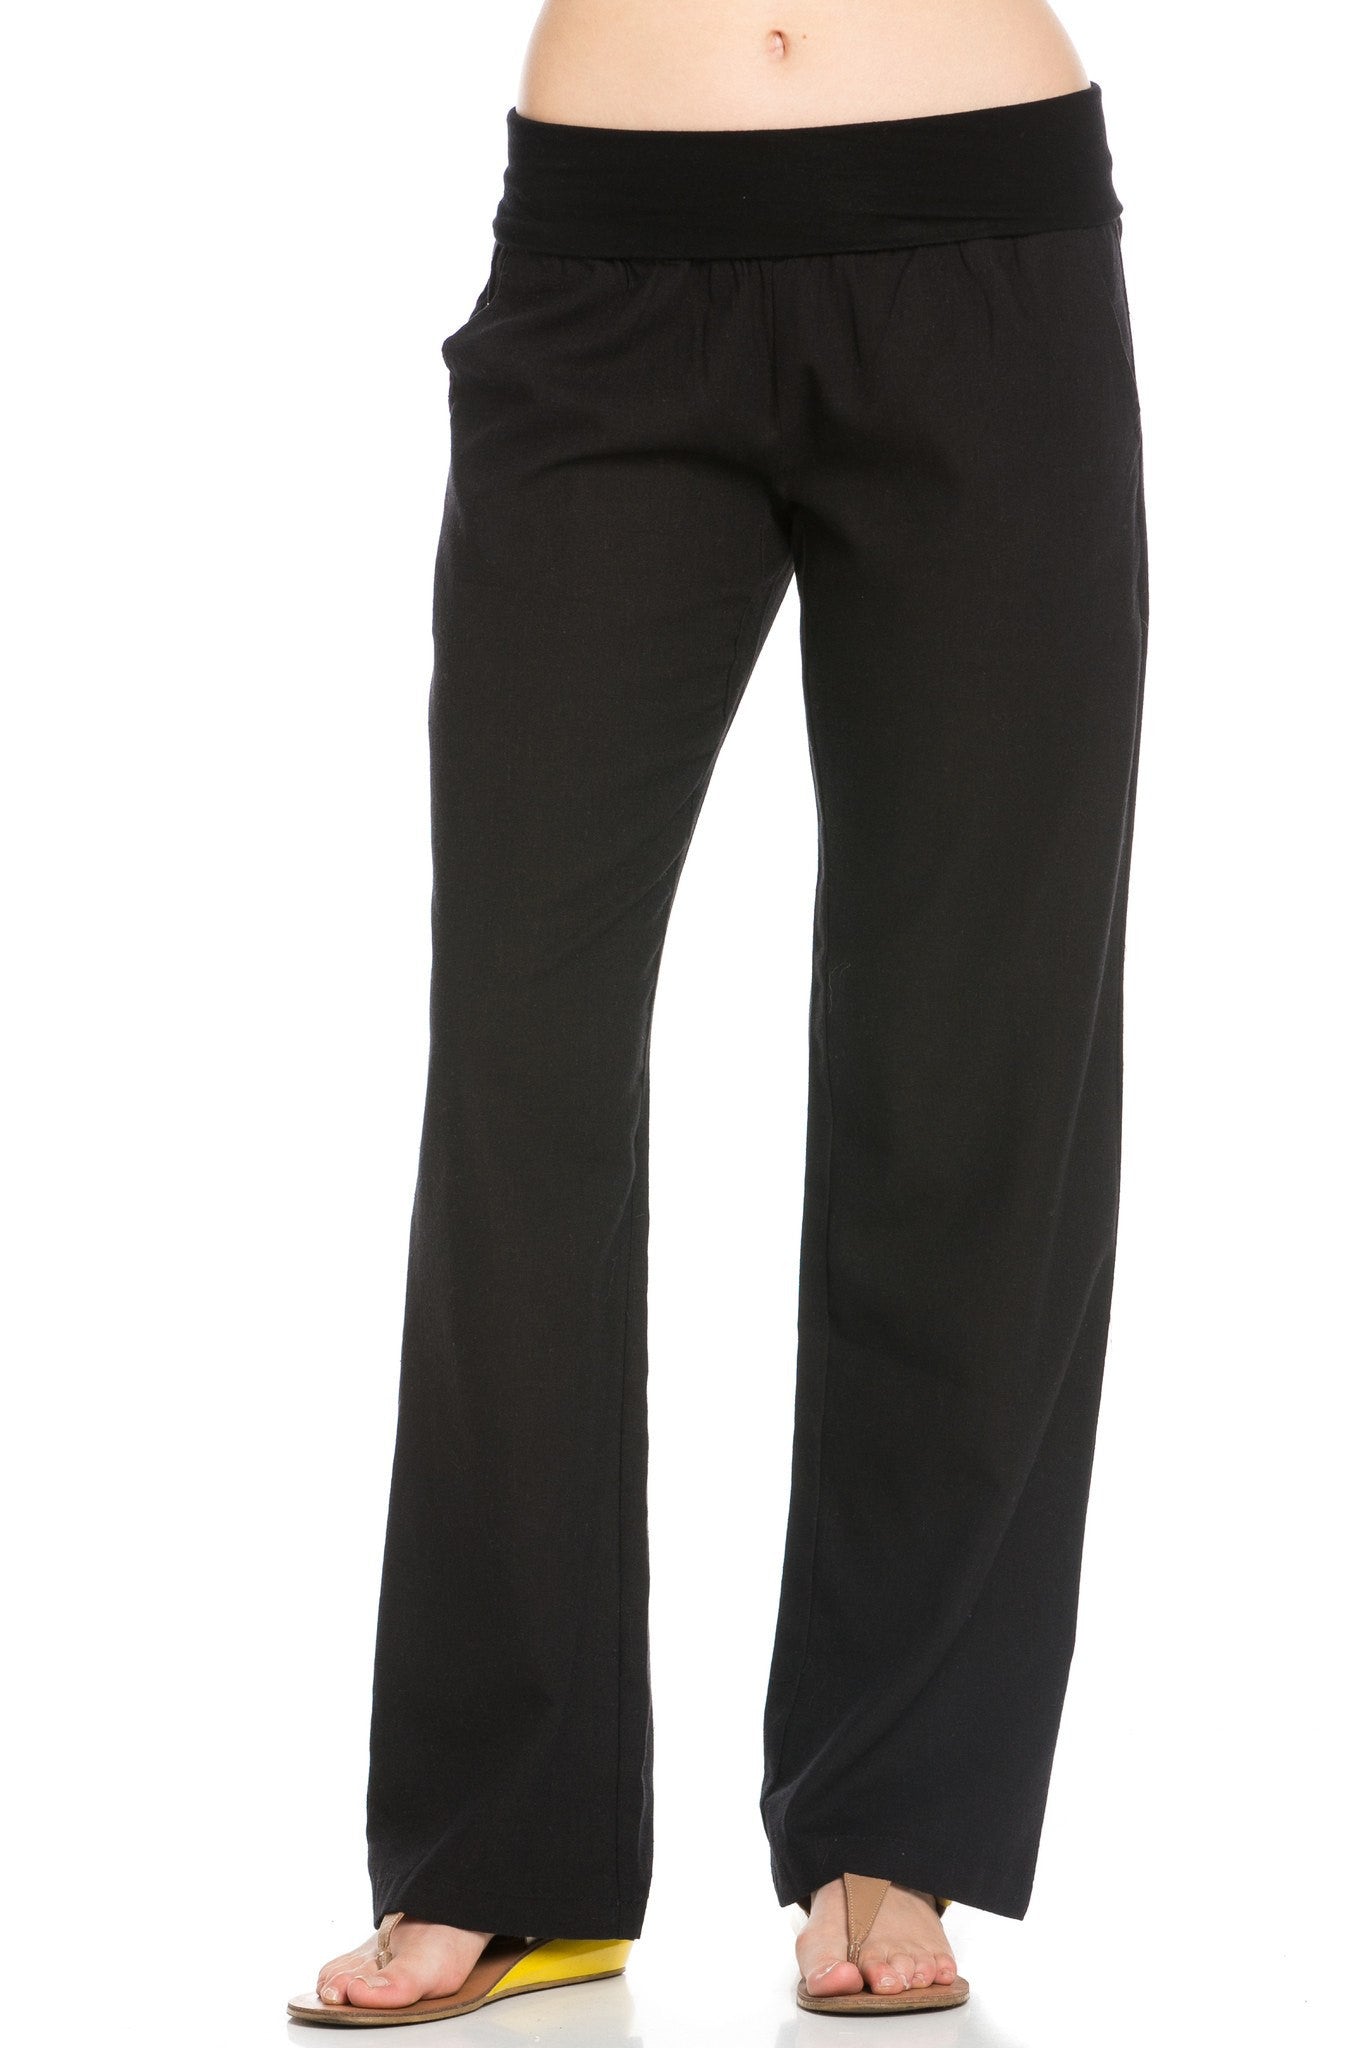 Poplooks Women's Comfy Fold Over Linen Pants (Black)